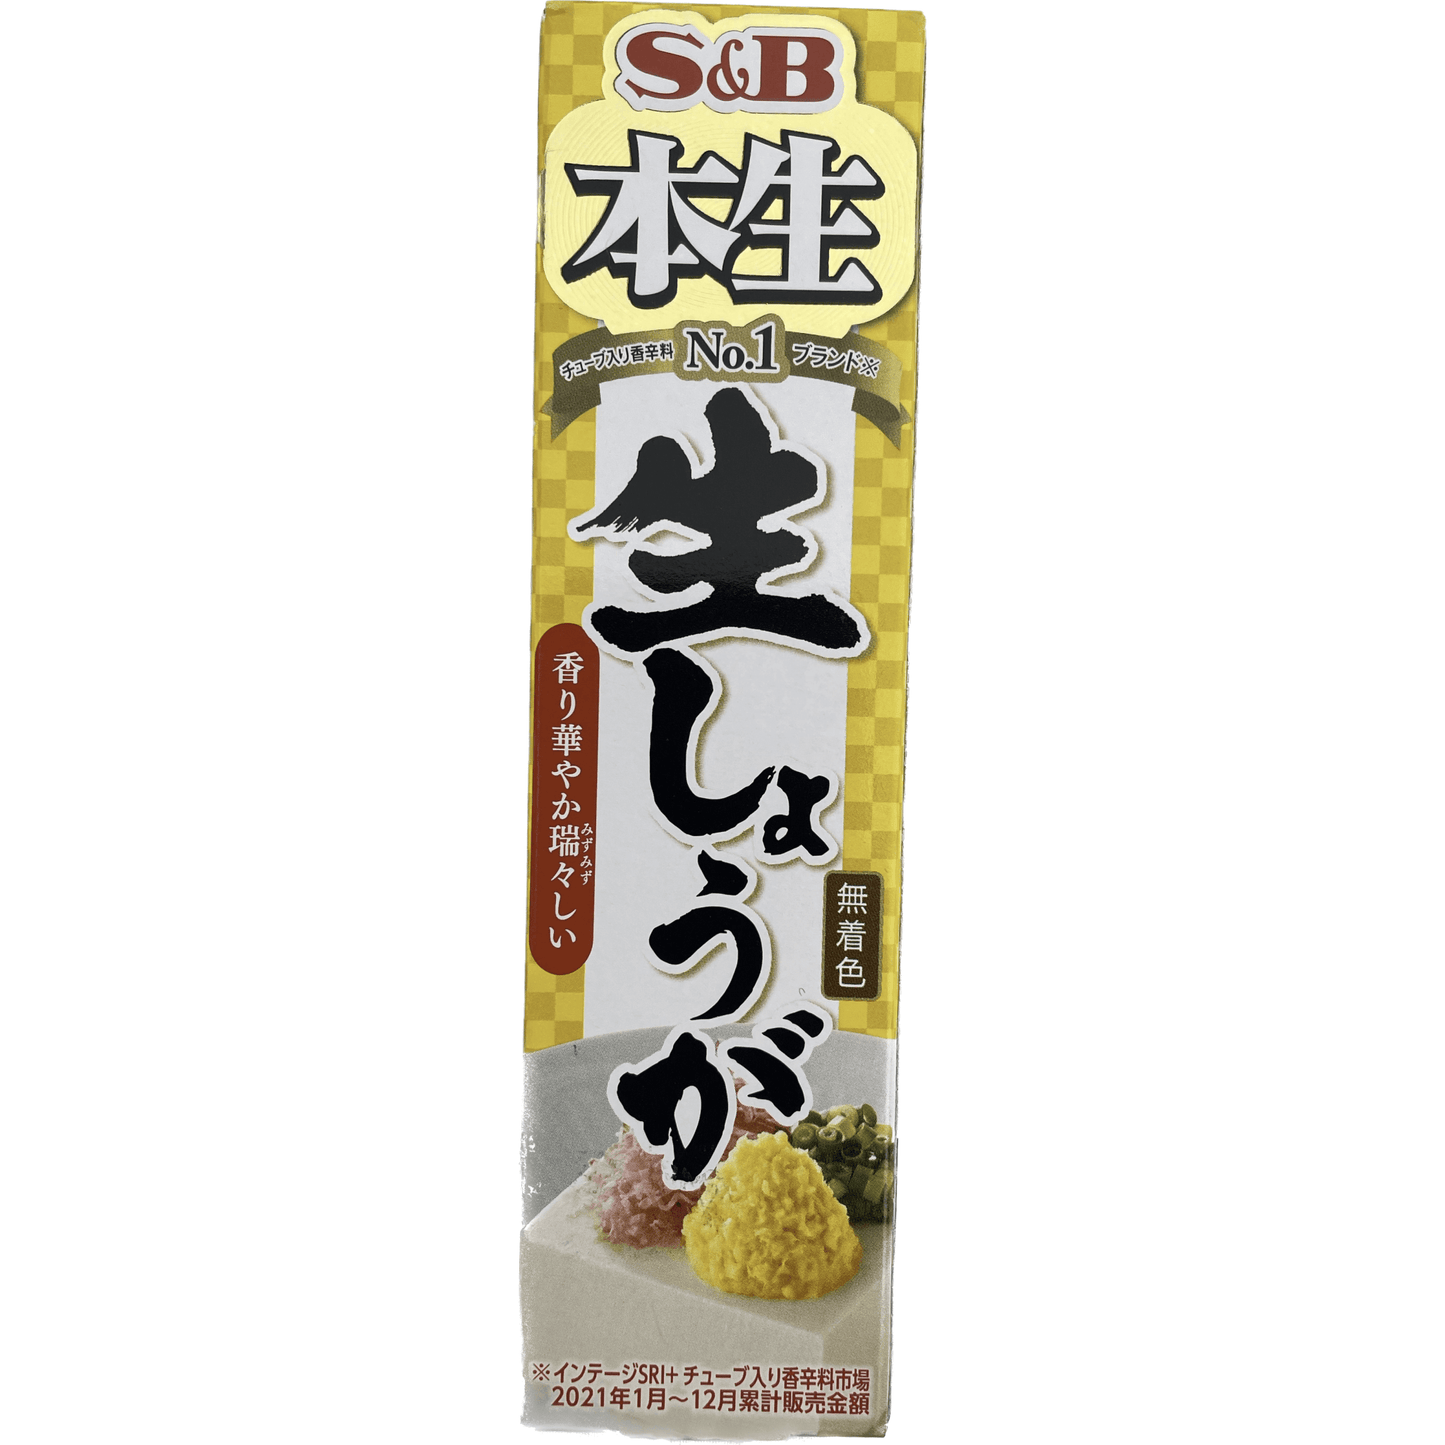 S&B Nama Shoga - RiceWineShop